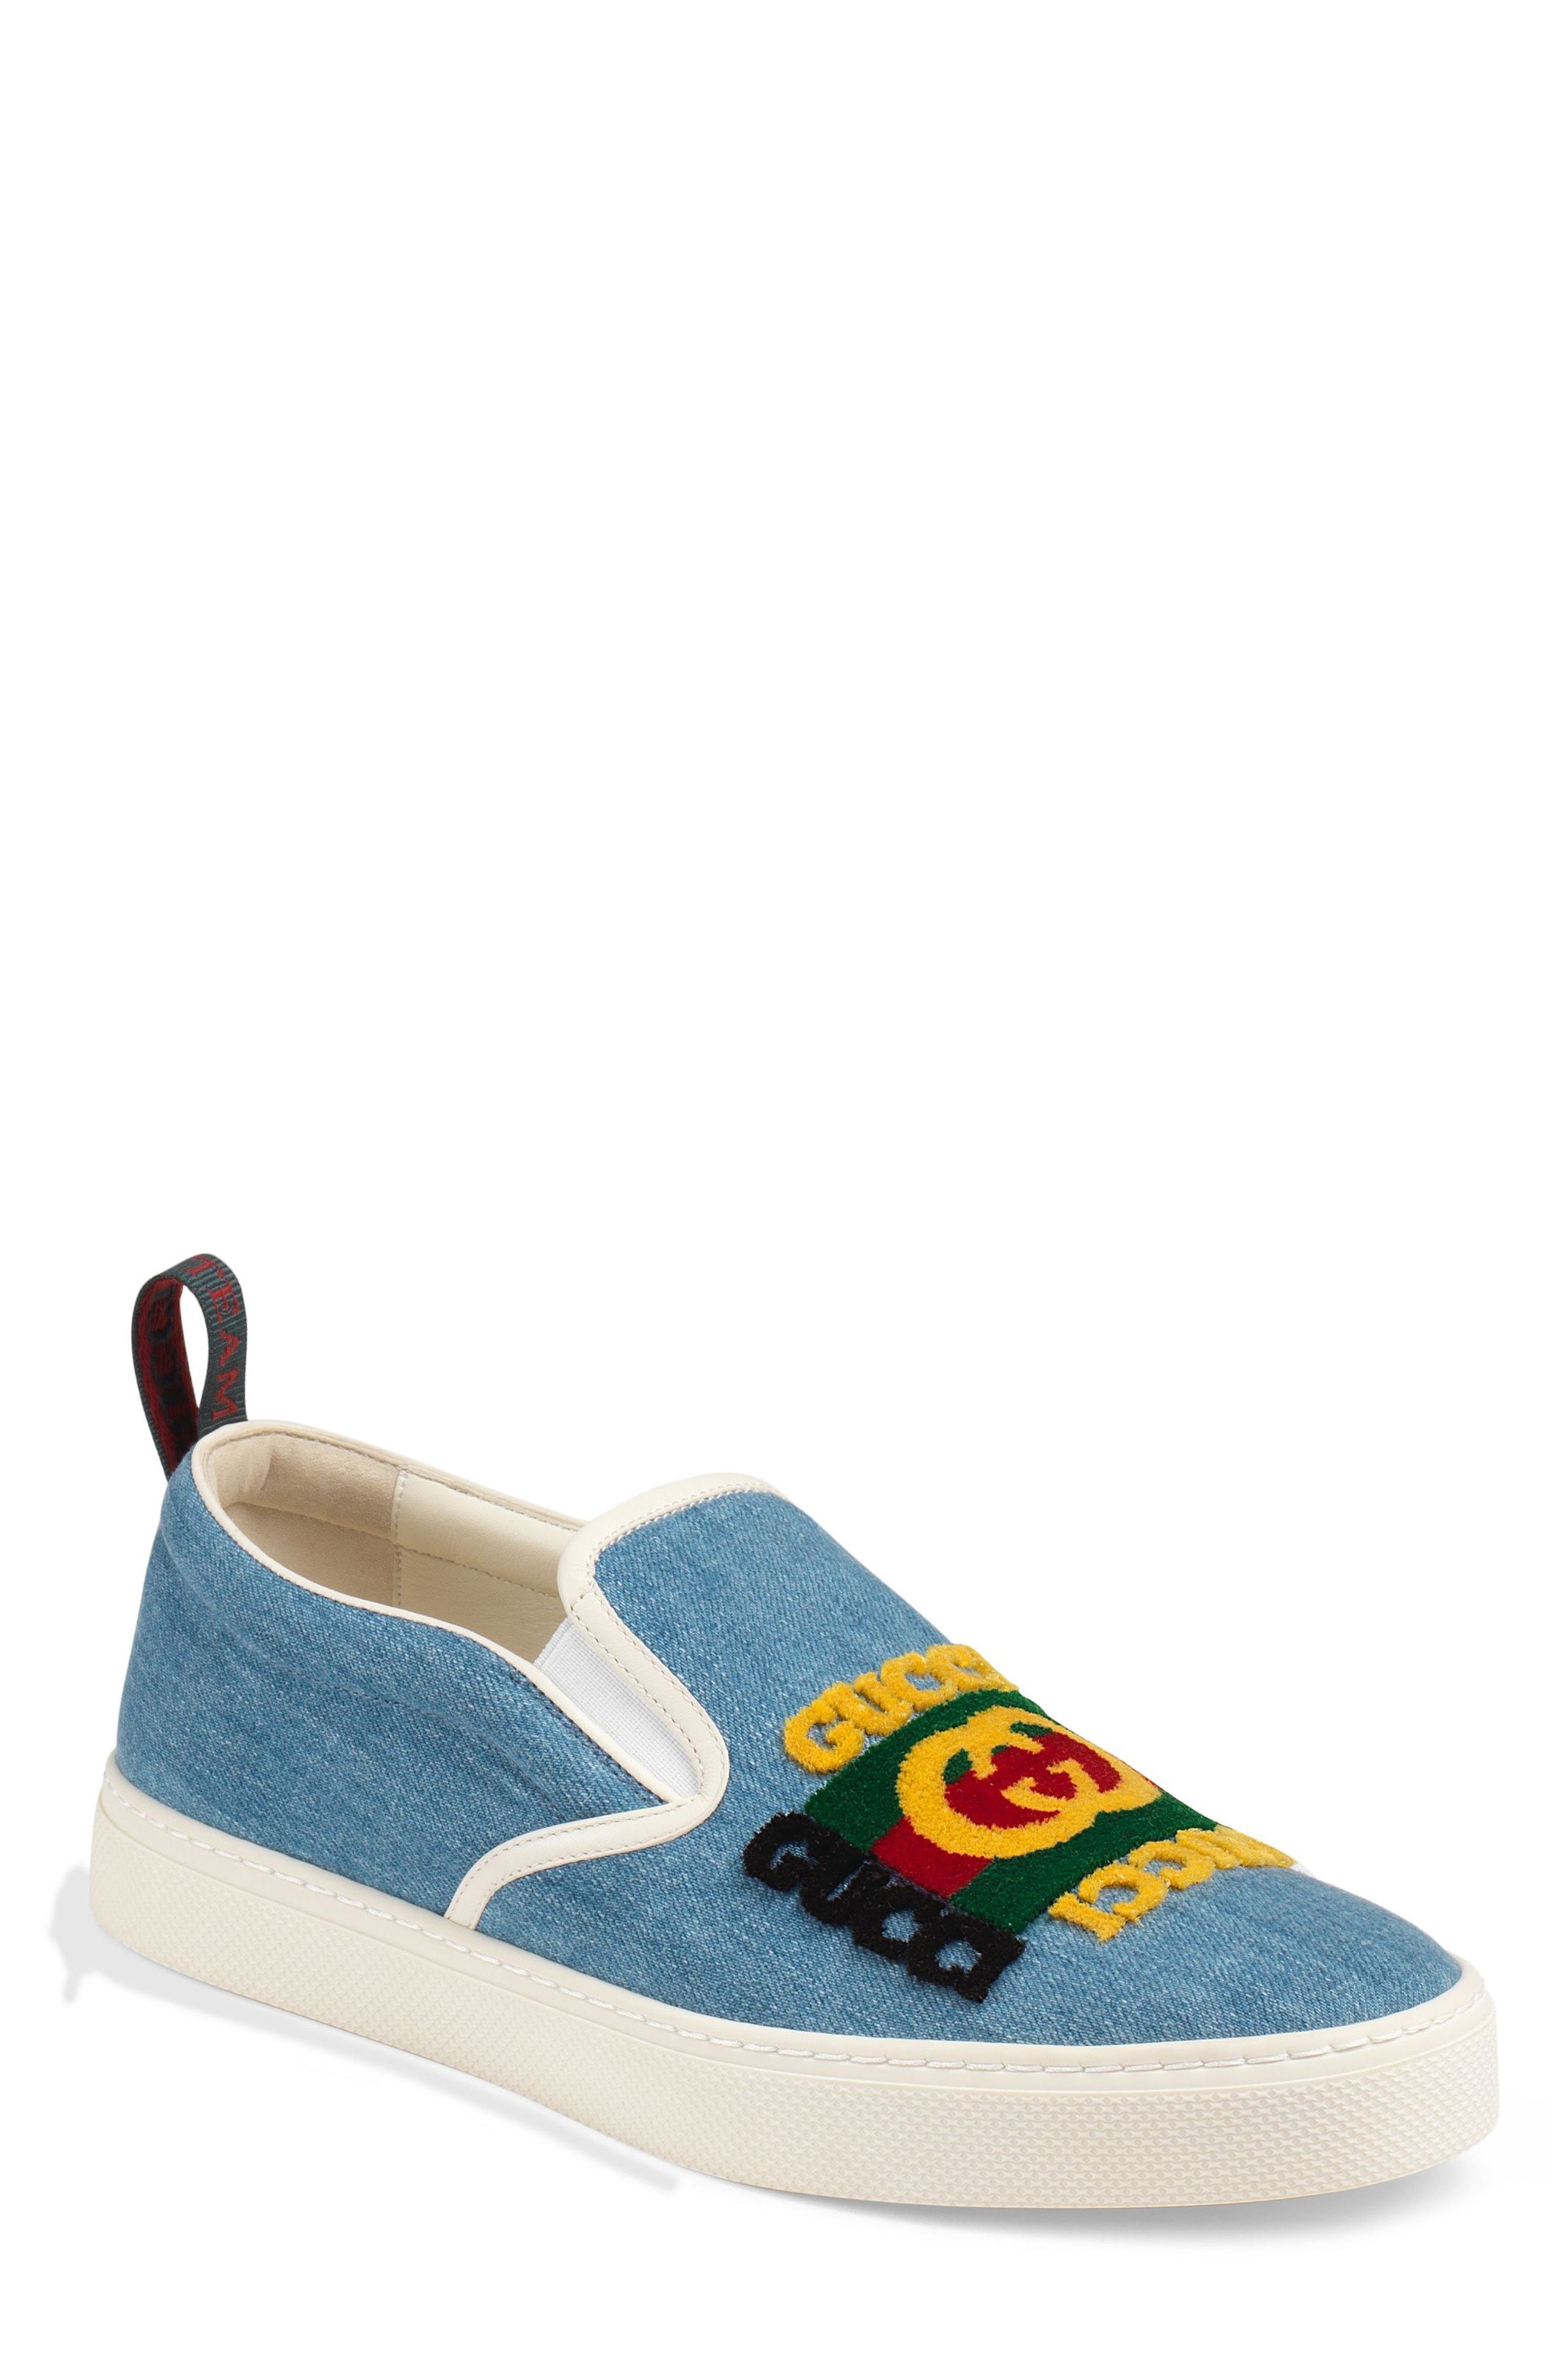 Gucci Dublin Slip On Sneaker, $670 